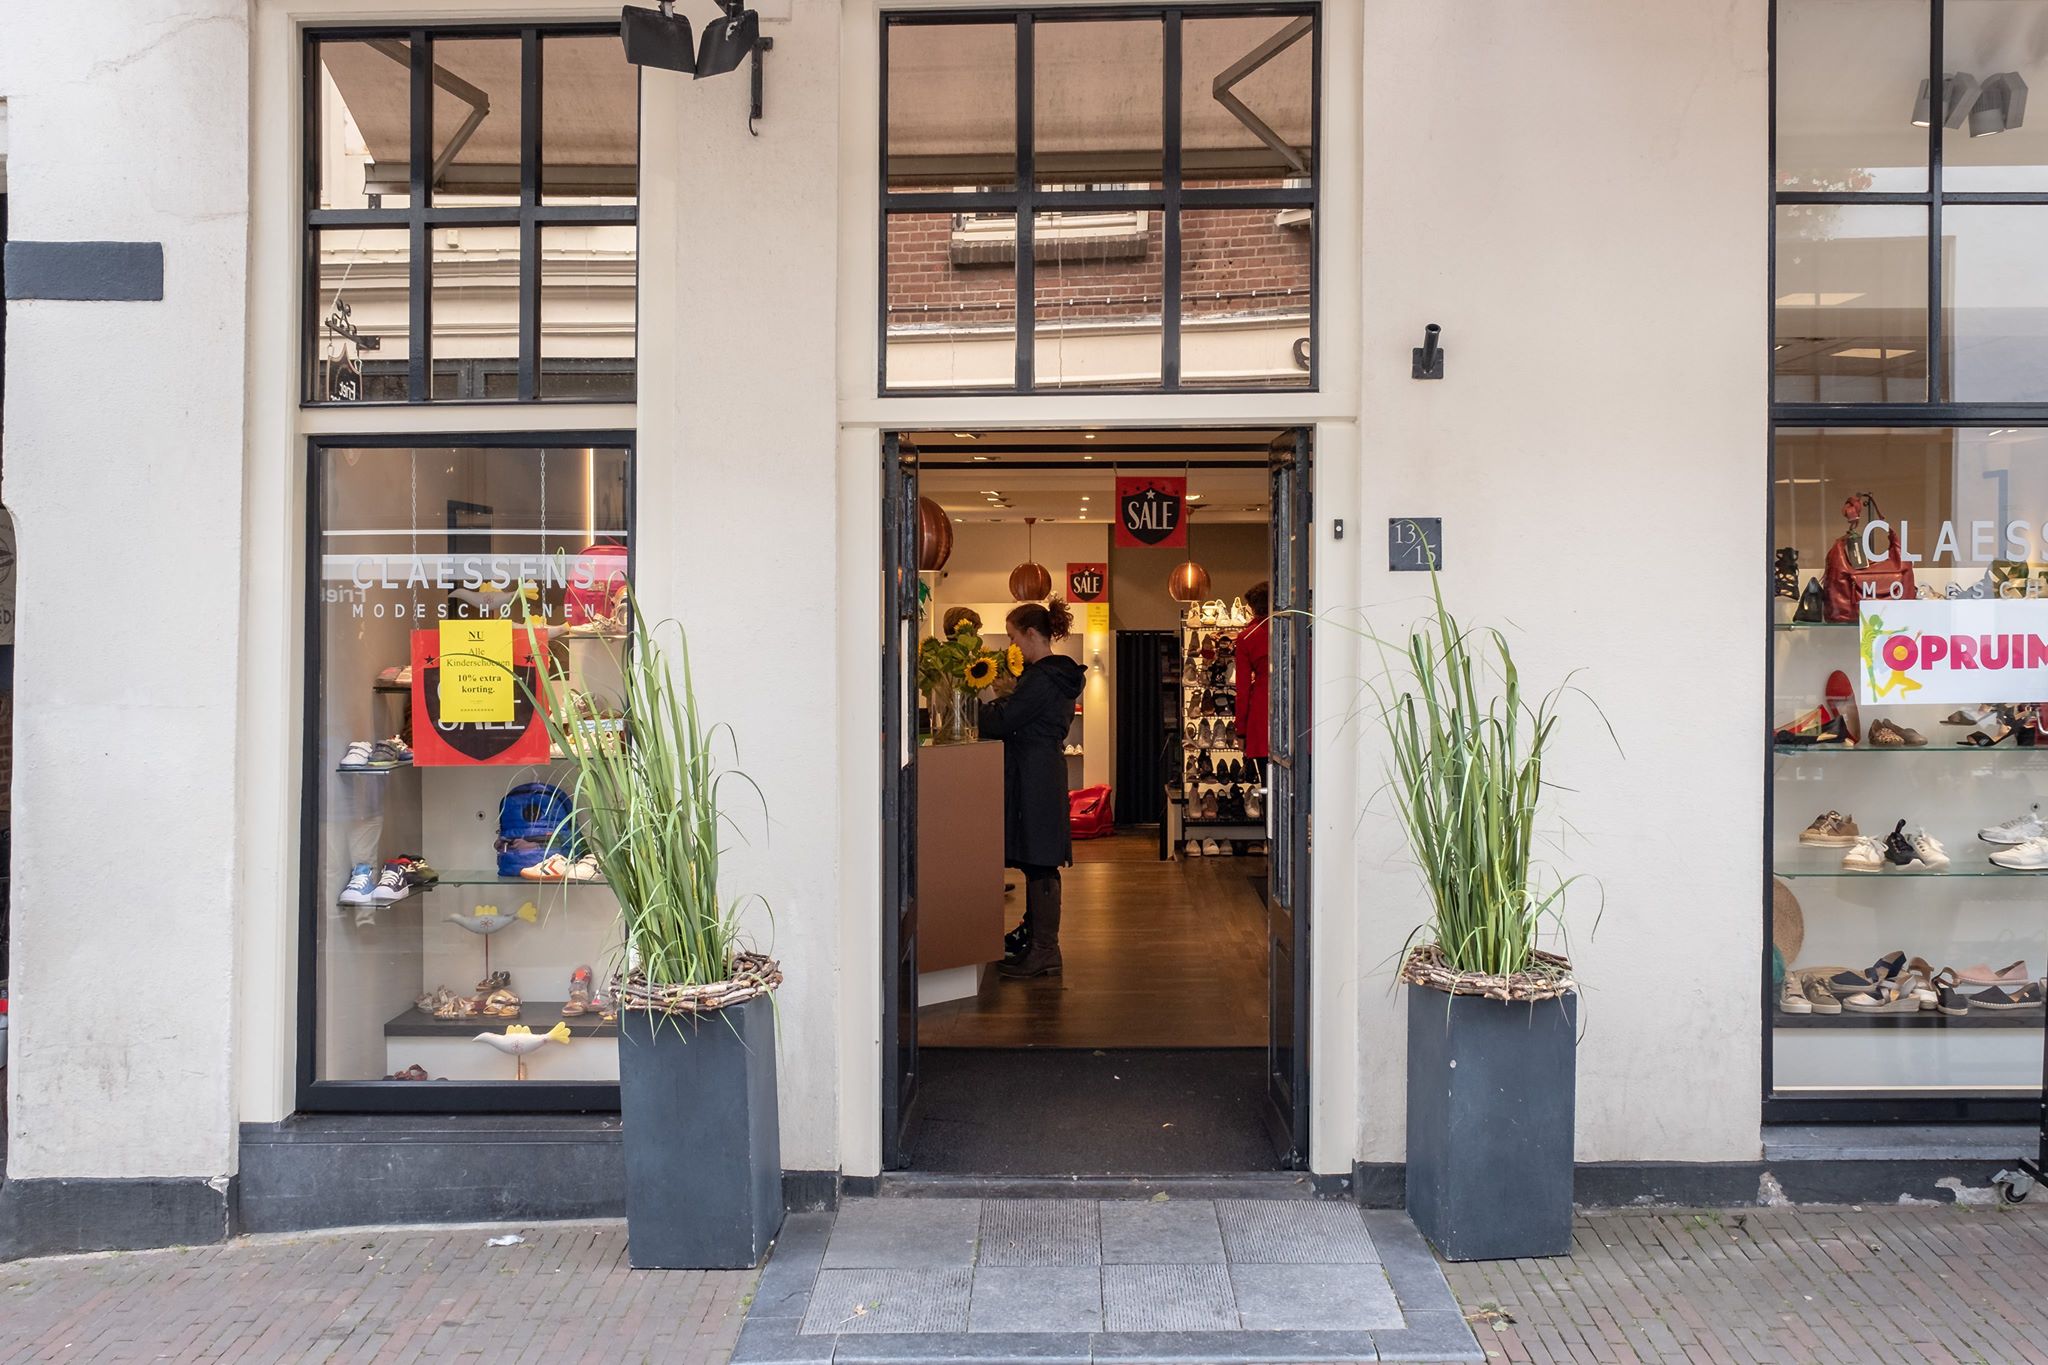 Zeeziekte wazig Razernij Claessens Modeschoenen - Shoppen in Deventer